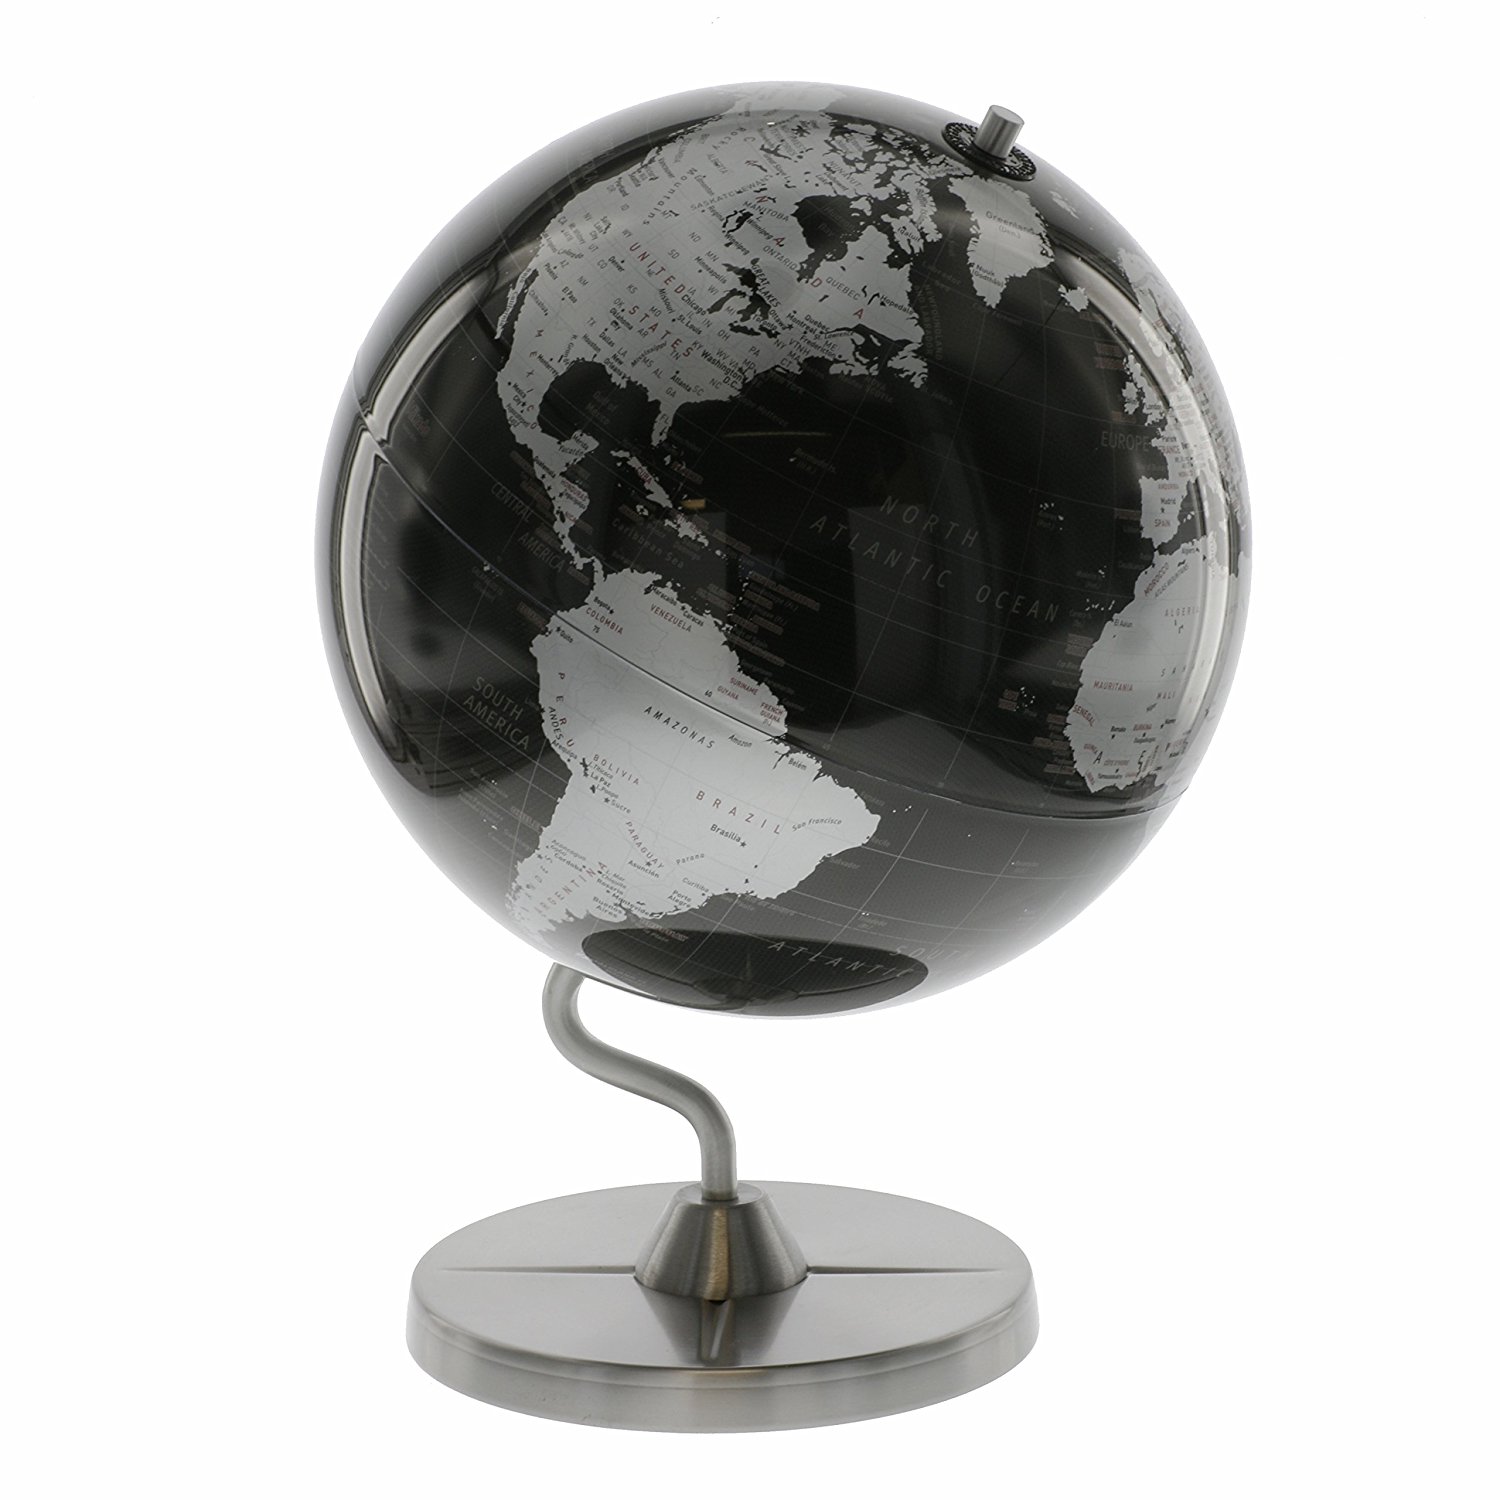 Amazon.com: Metallic Globe - Contemporary Silver And Black Political ...